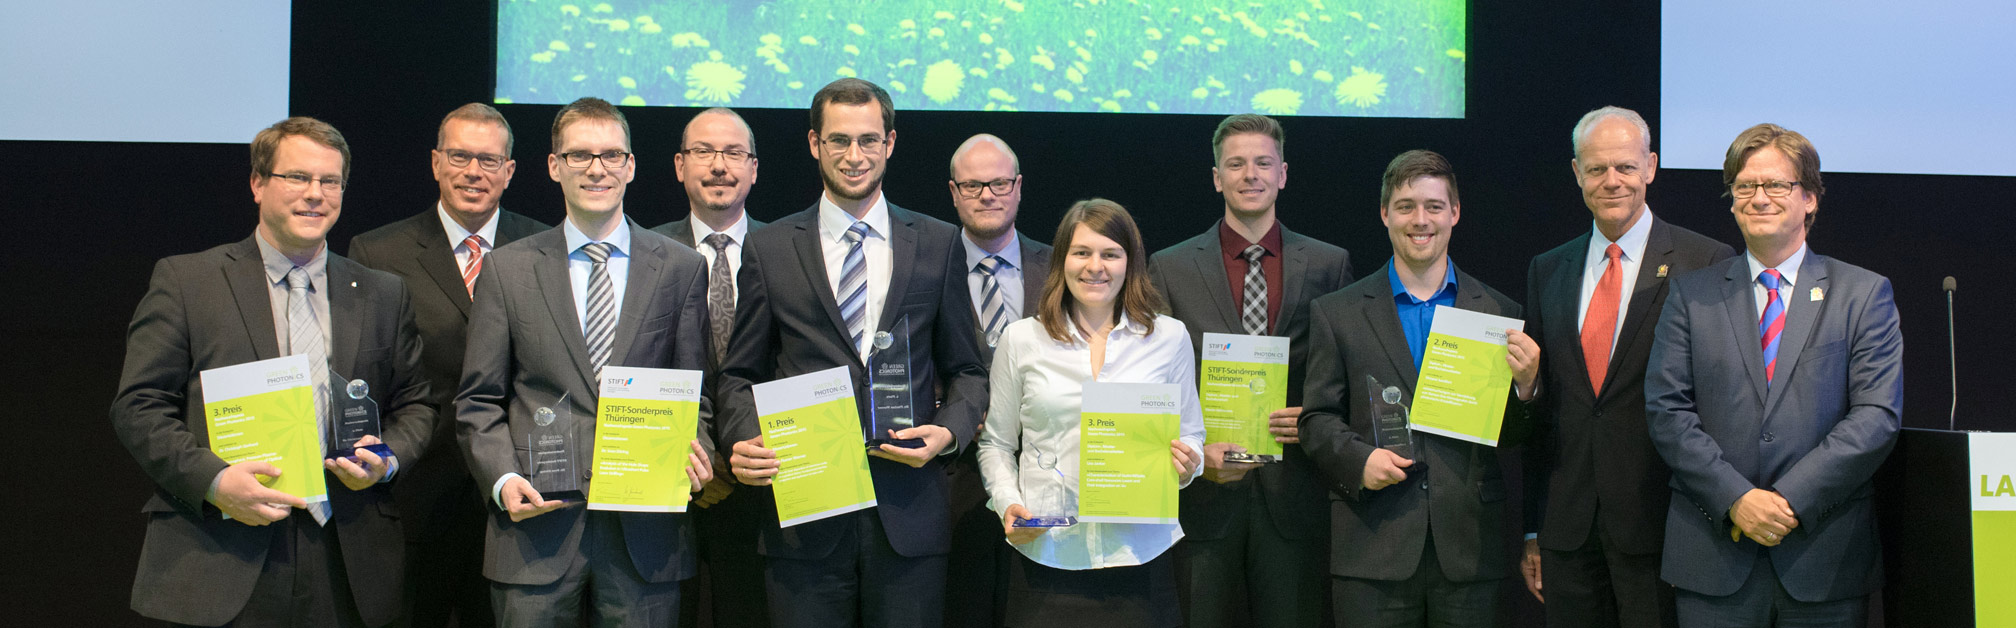 Nachwuchspreis Green Photonics Gewinner 2015